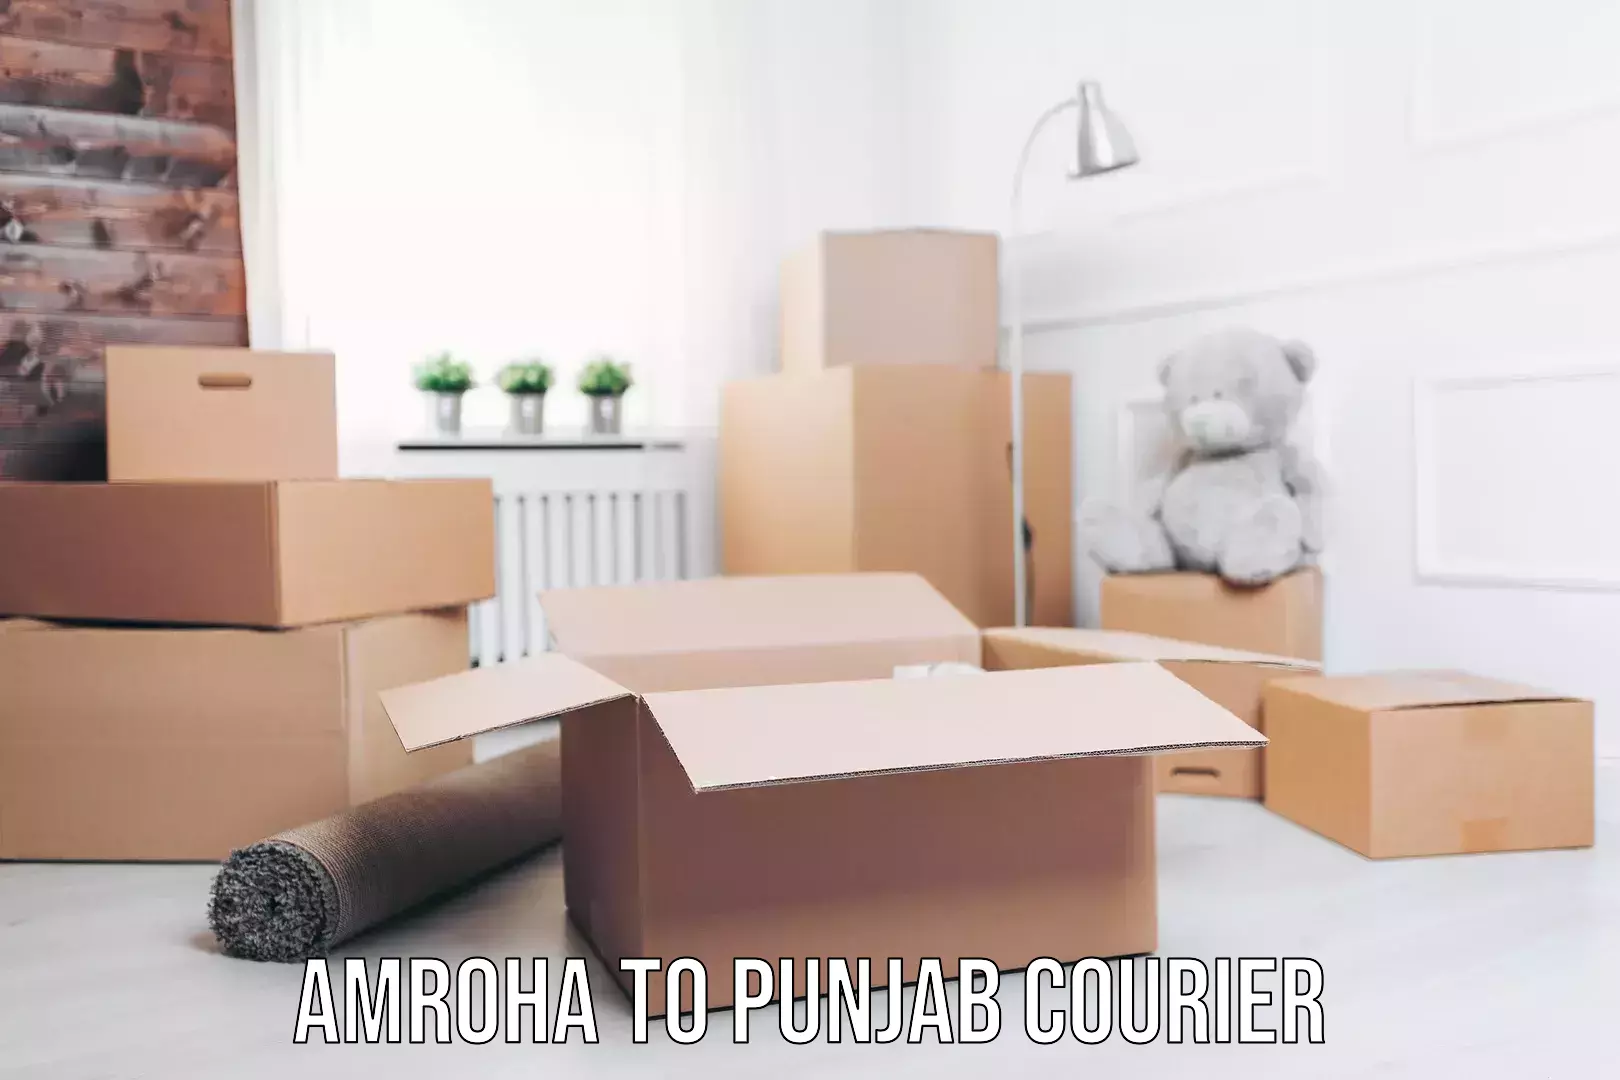 Delivery service partnership Amroha to Punjab